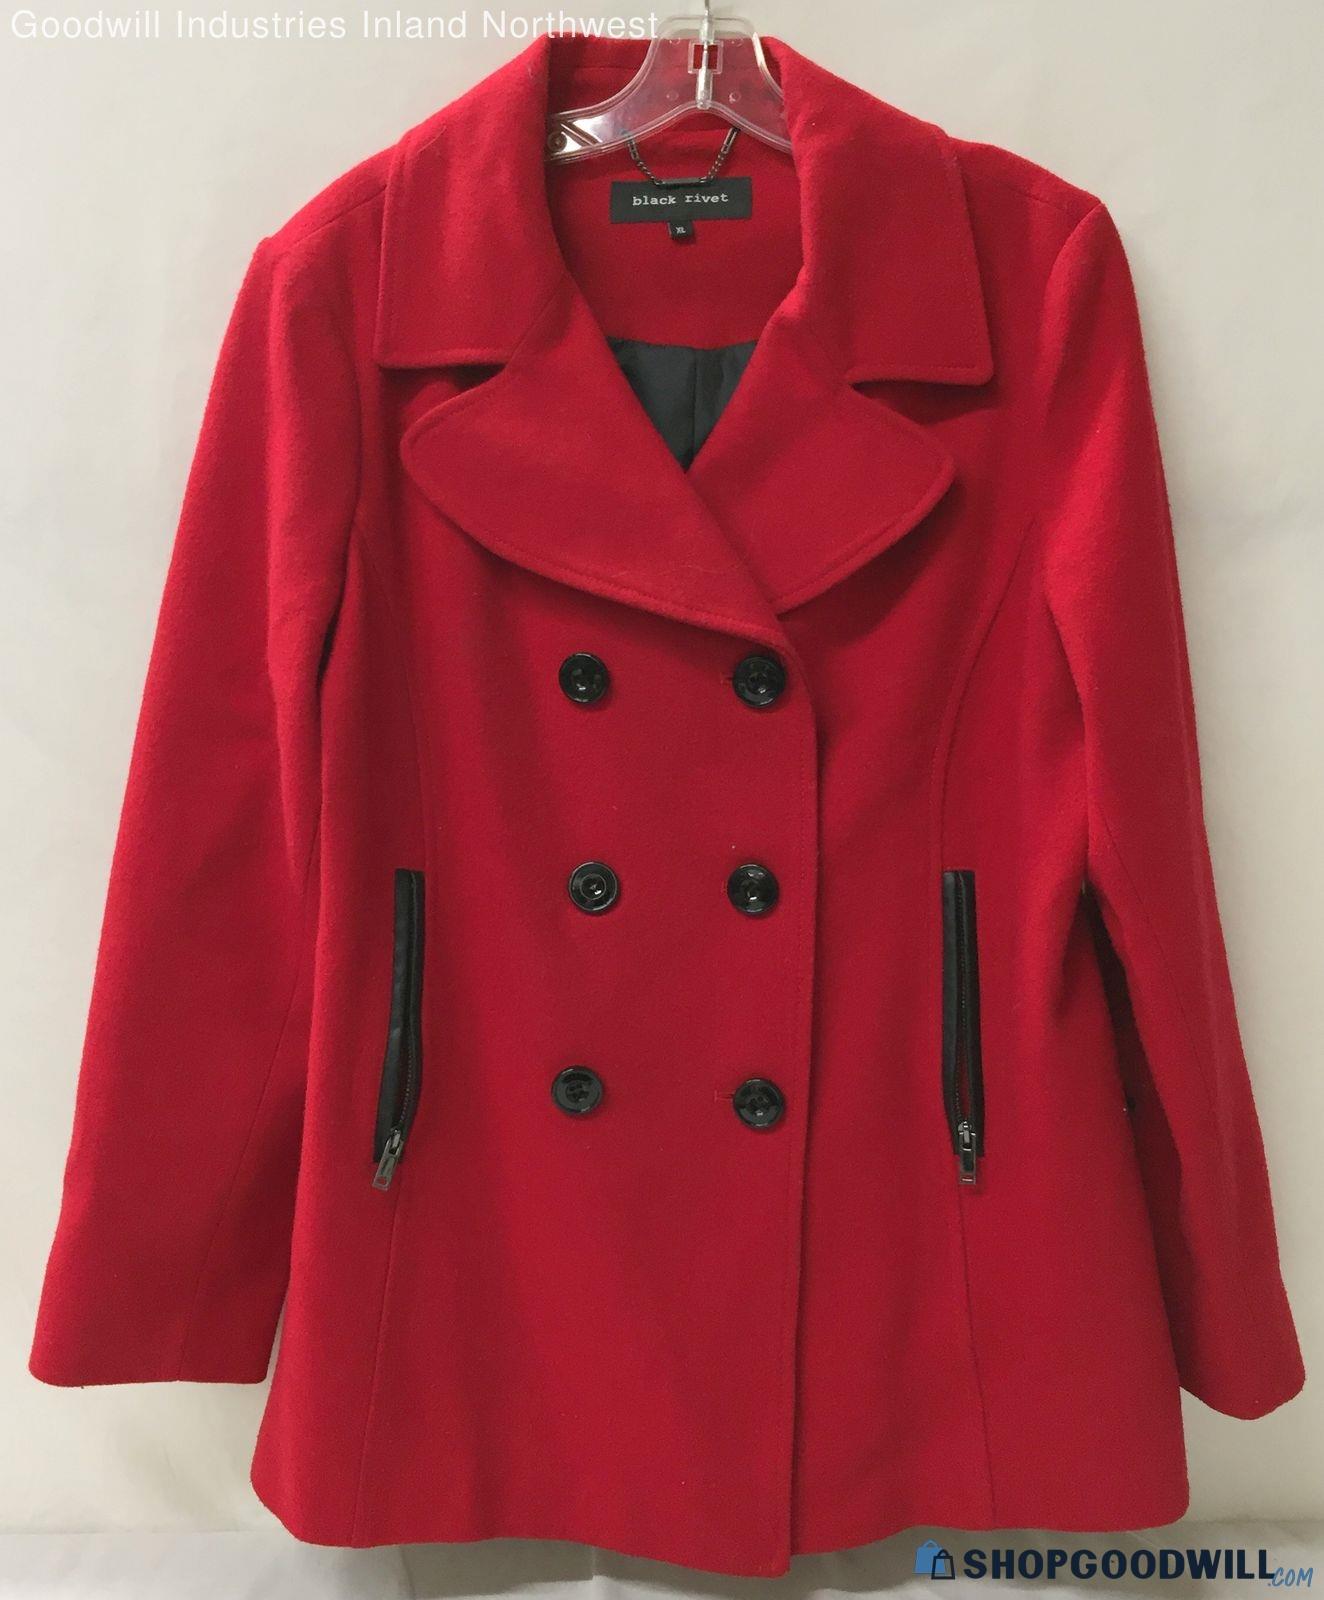 Women's Black Rivet Red Wool Blend Jacket Size Xl | ShopGoodwill.com